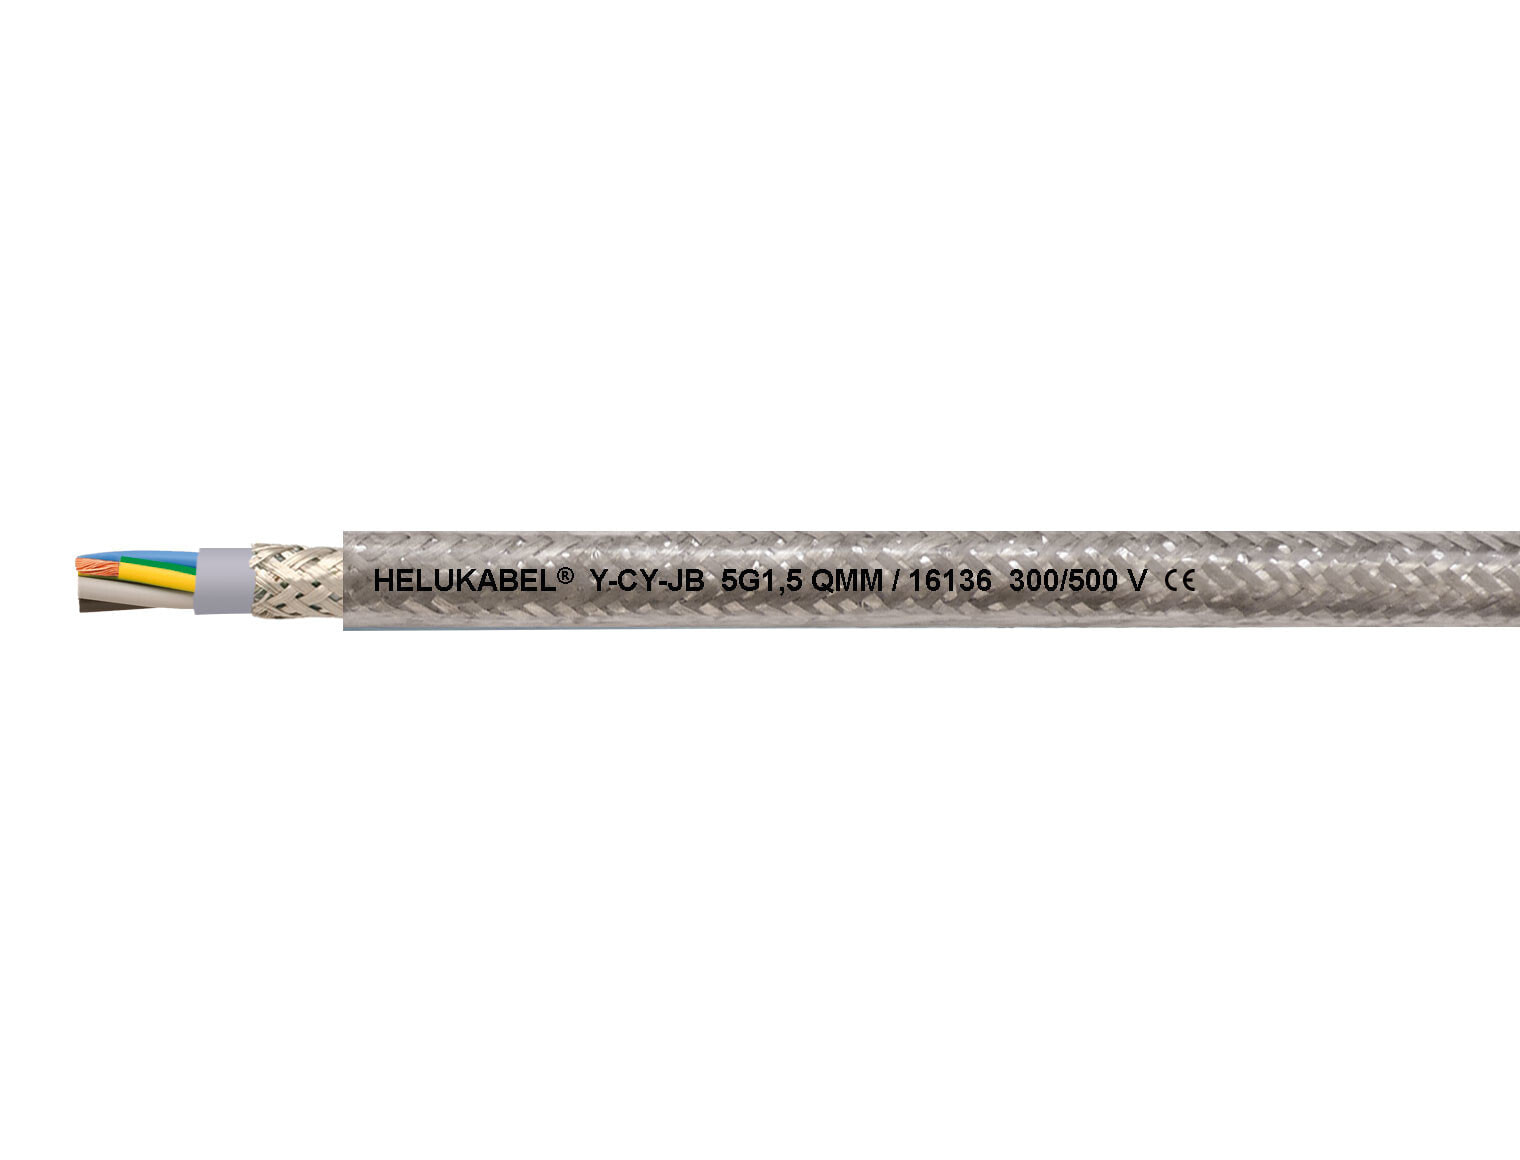 Helukabel Y-CY-JB - Low voltage cable - Transparent - Polyvinyl chloride (PVC) - Polyvinyl chloride (PVC) - Cooper - -15 - 80 °C